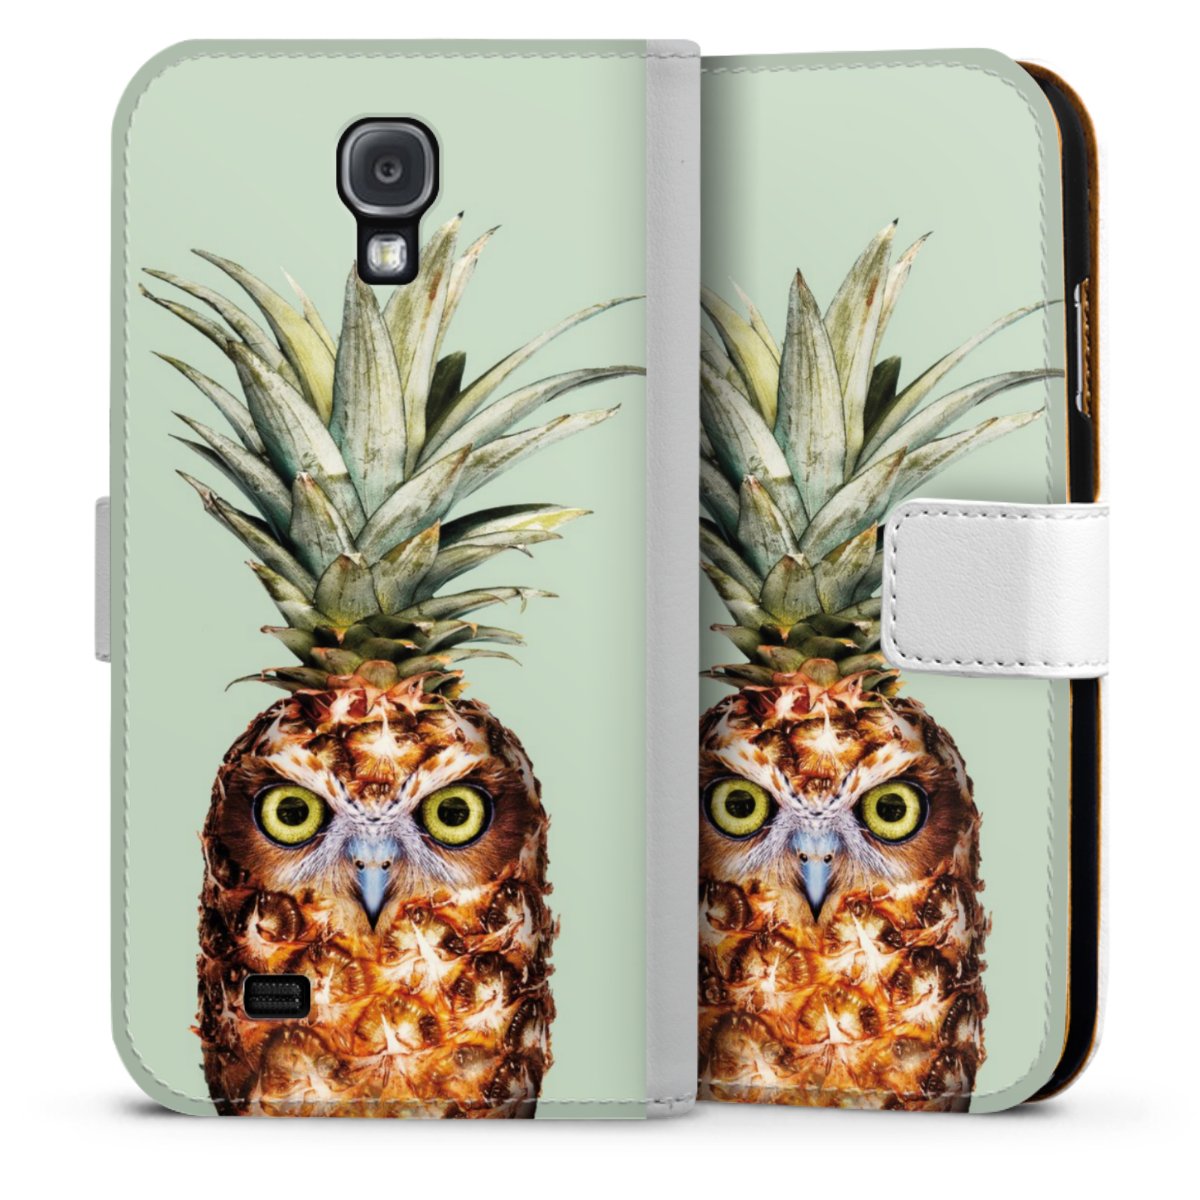 Pineapple Owl